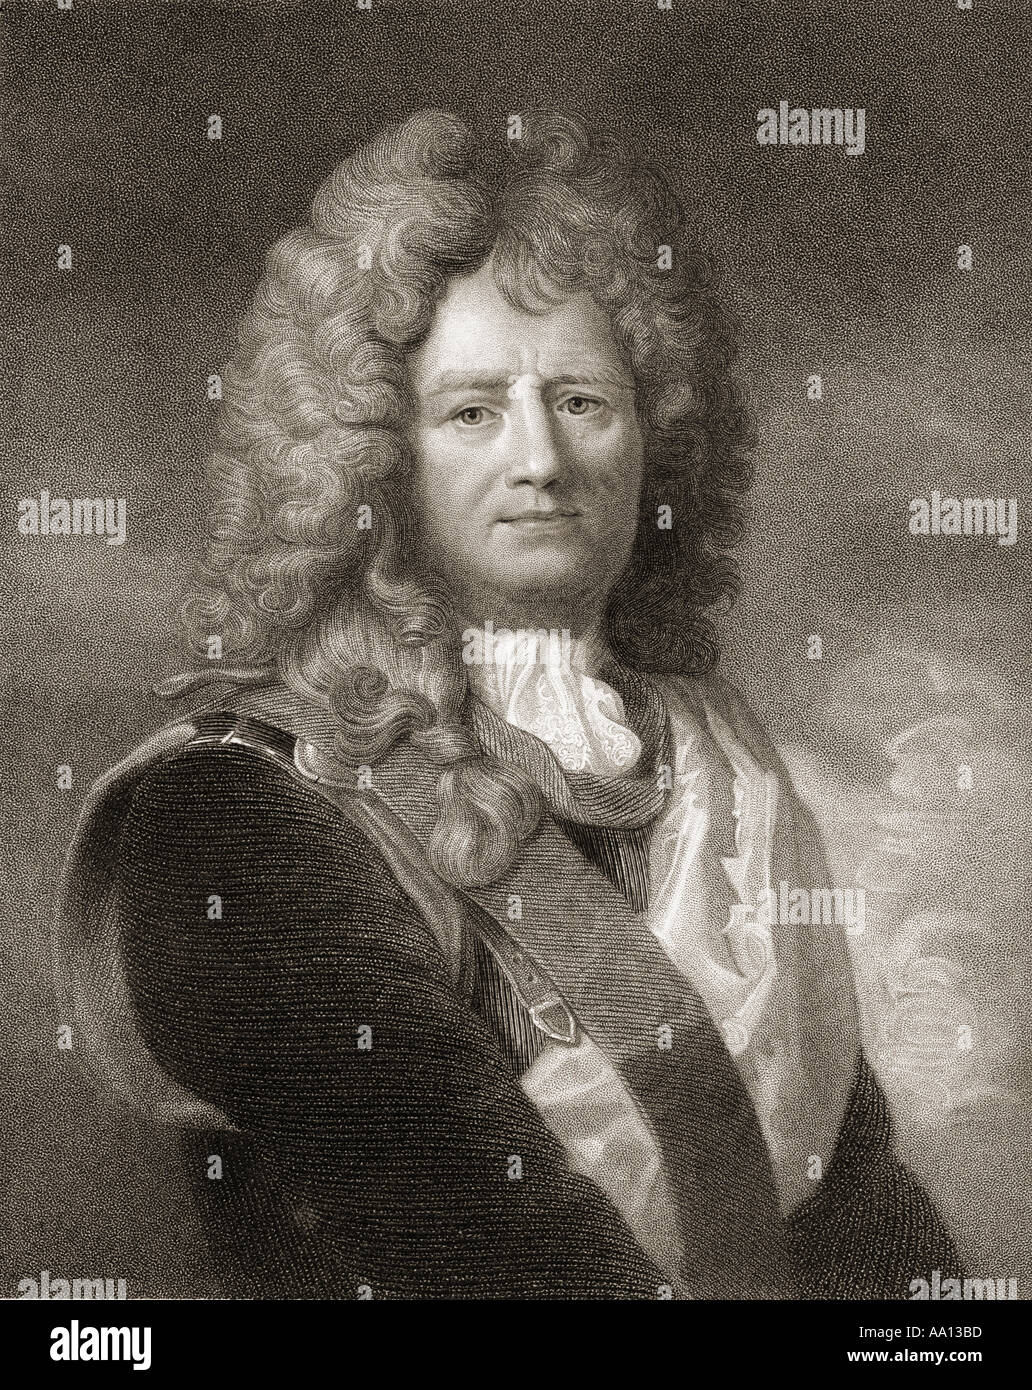 Sébastien Le Prestre de Vauban, Seigneur de Vauban und später Marquis de Vauban, 1633-1707. Französischer Militäringenieur. Stockfoto